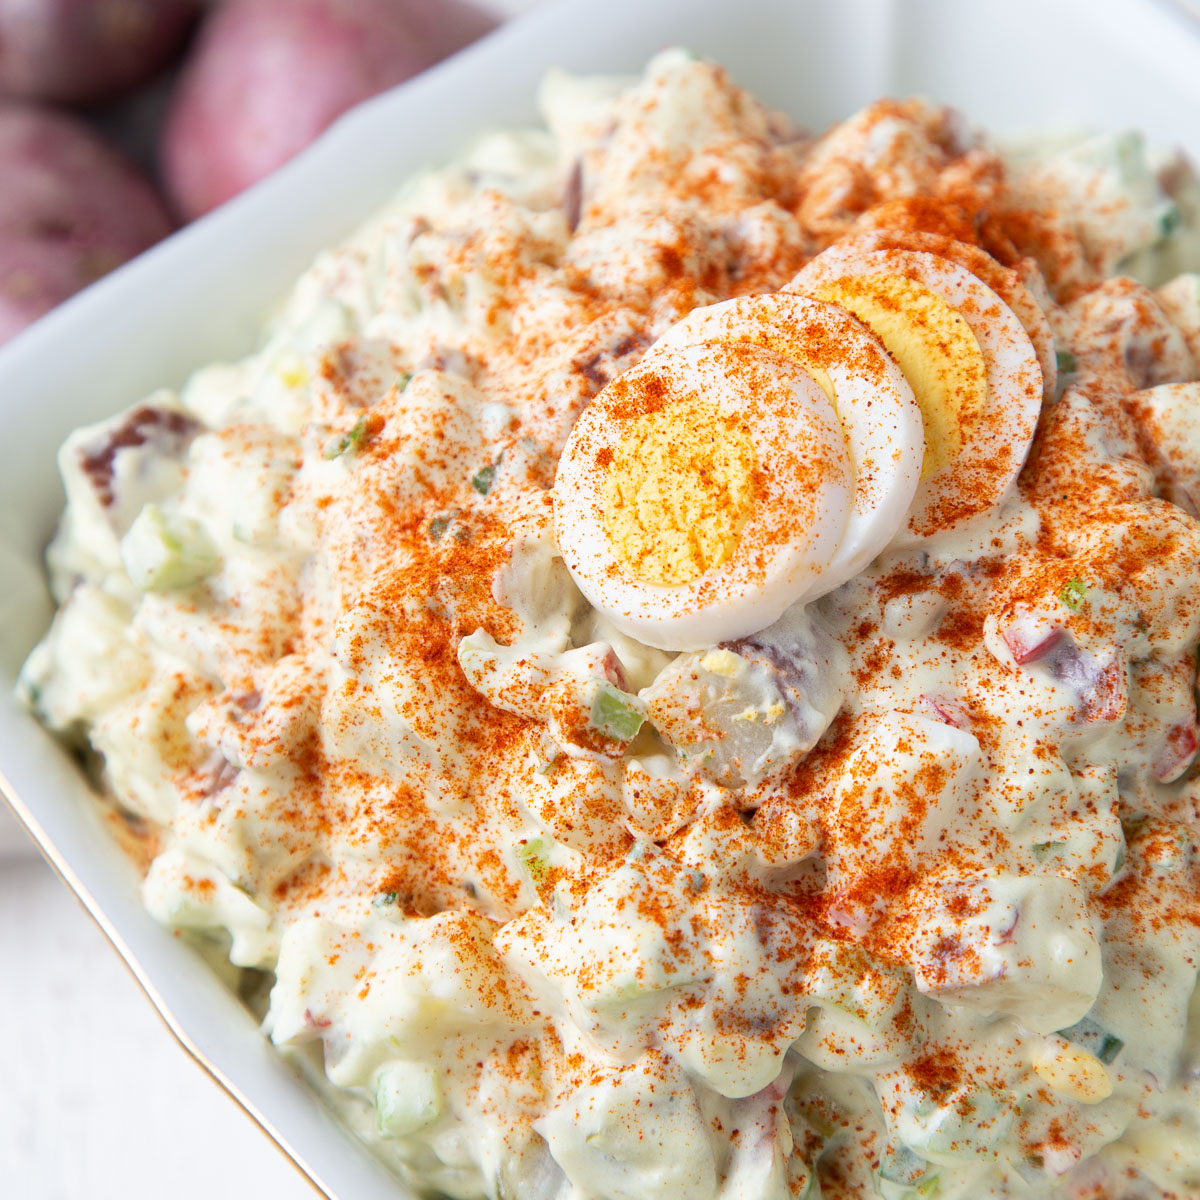 Red Potato Salad (Easy Red Bliss Recipe) - Fifteen Spatulas